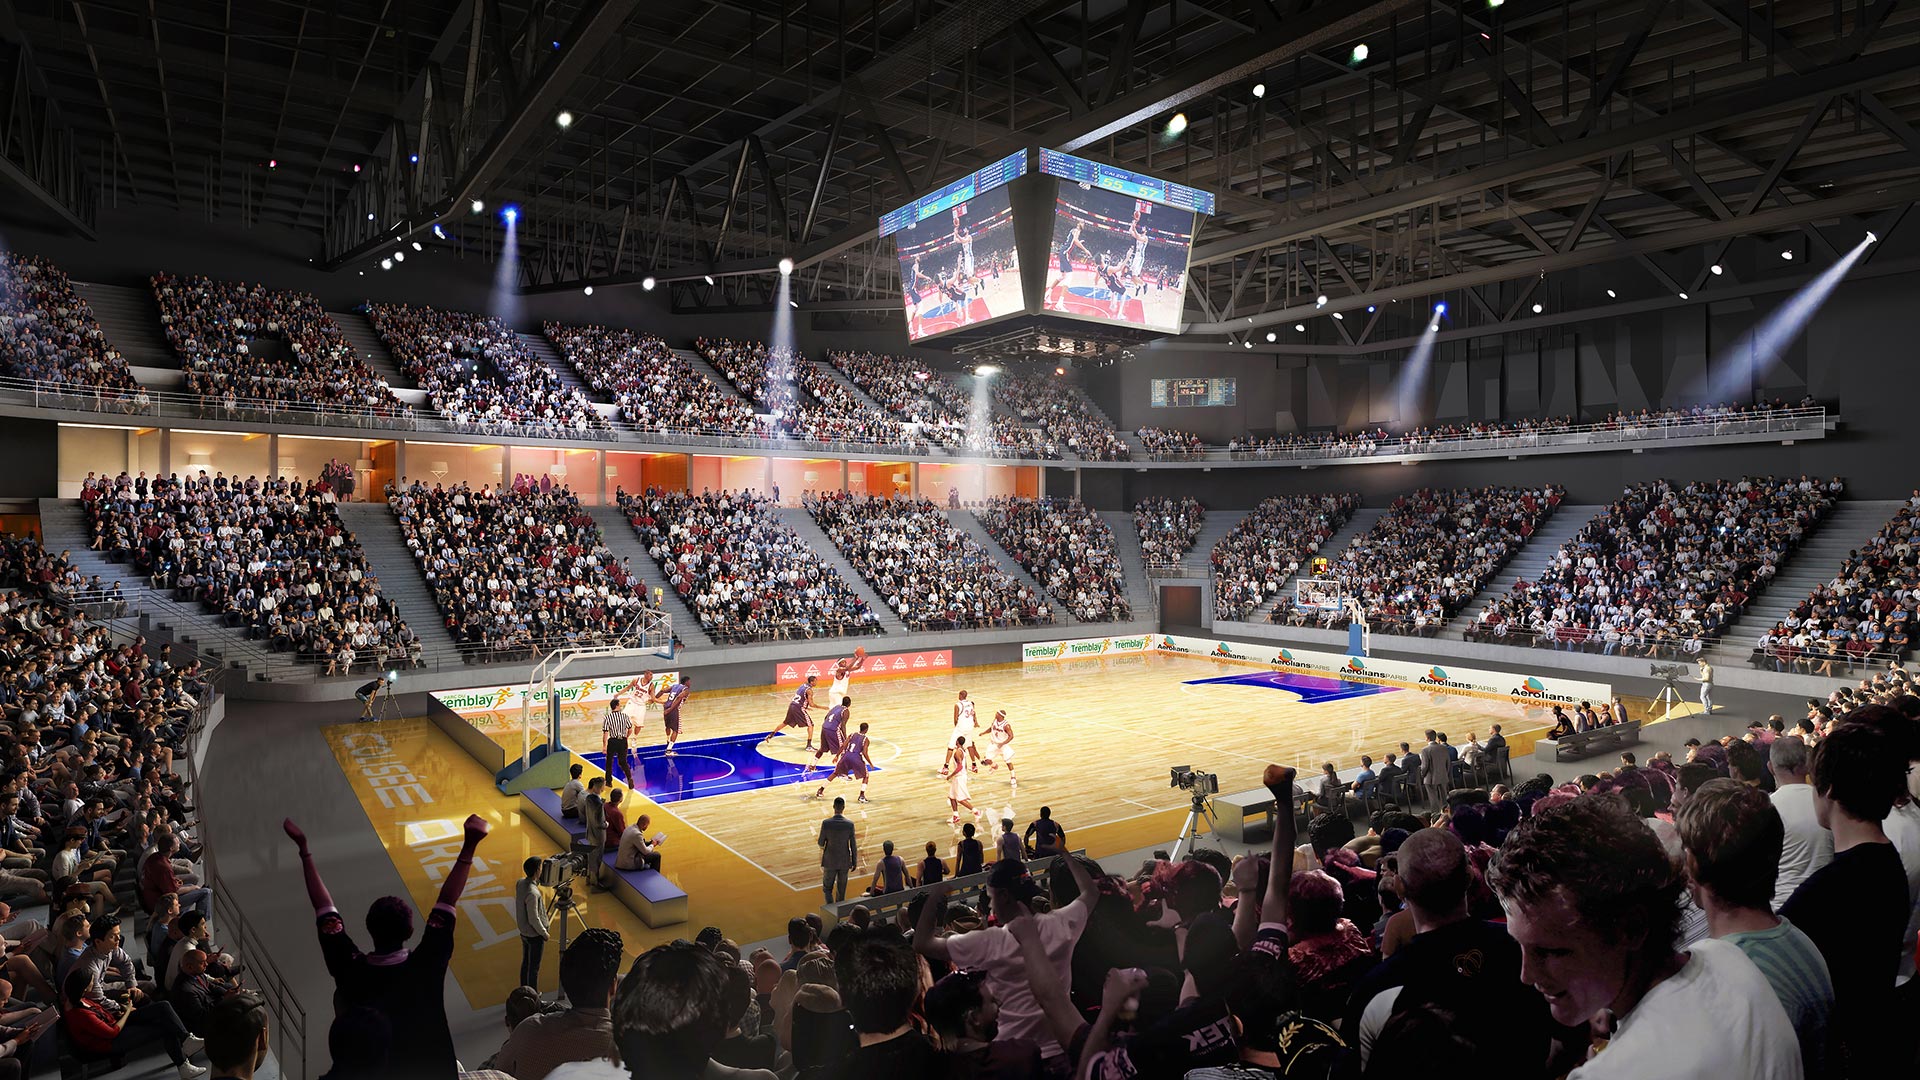 Salle multifonction - Basketball - Agrandir l'image, . 0octets (fenêtre modale)